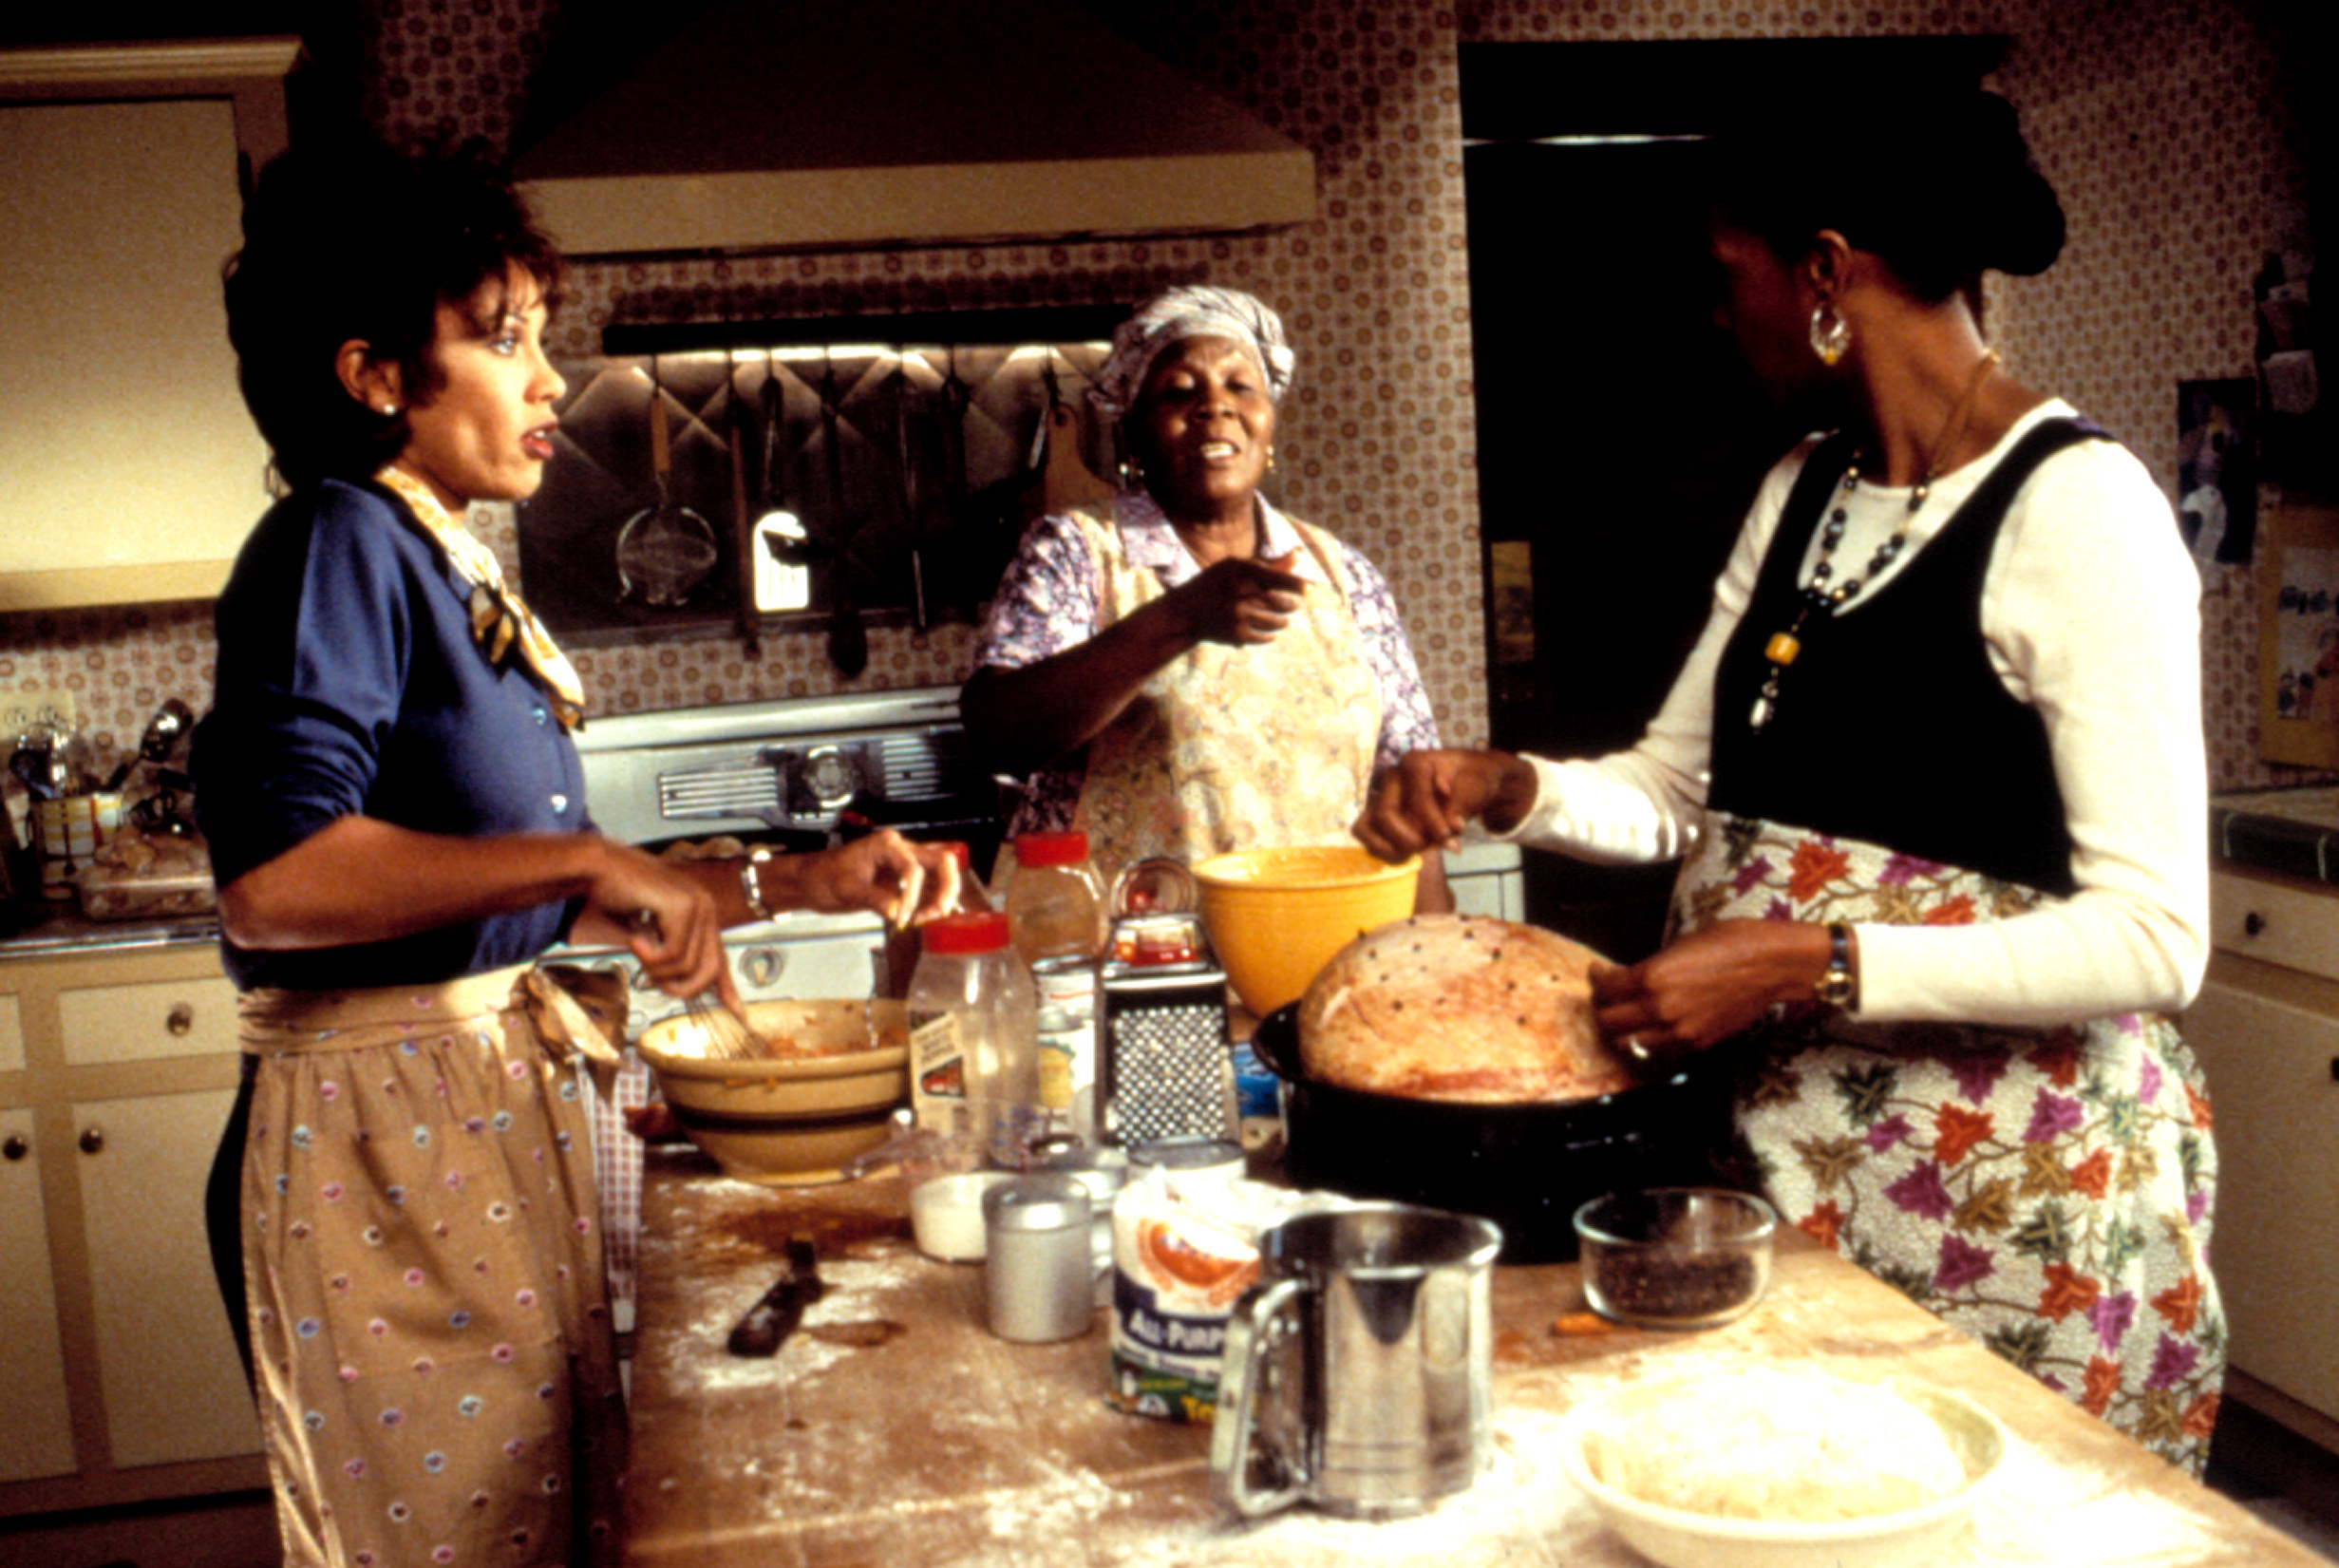 Vanessa L. Williams, Irma P. Hall, and Vivica A. Fox cook in a kitchen